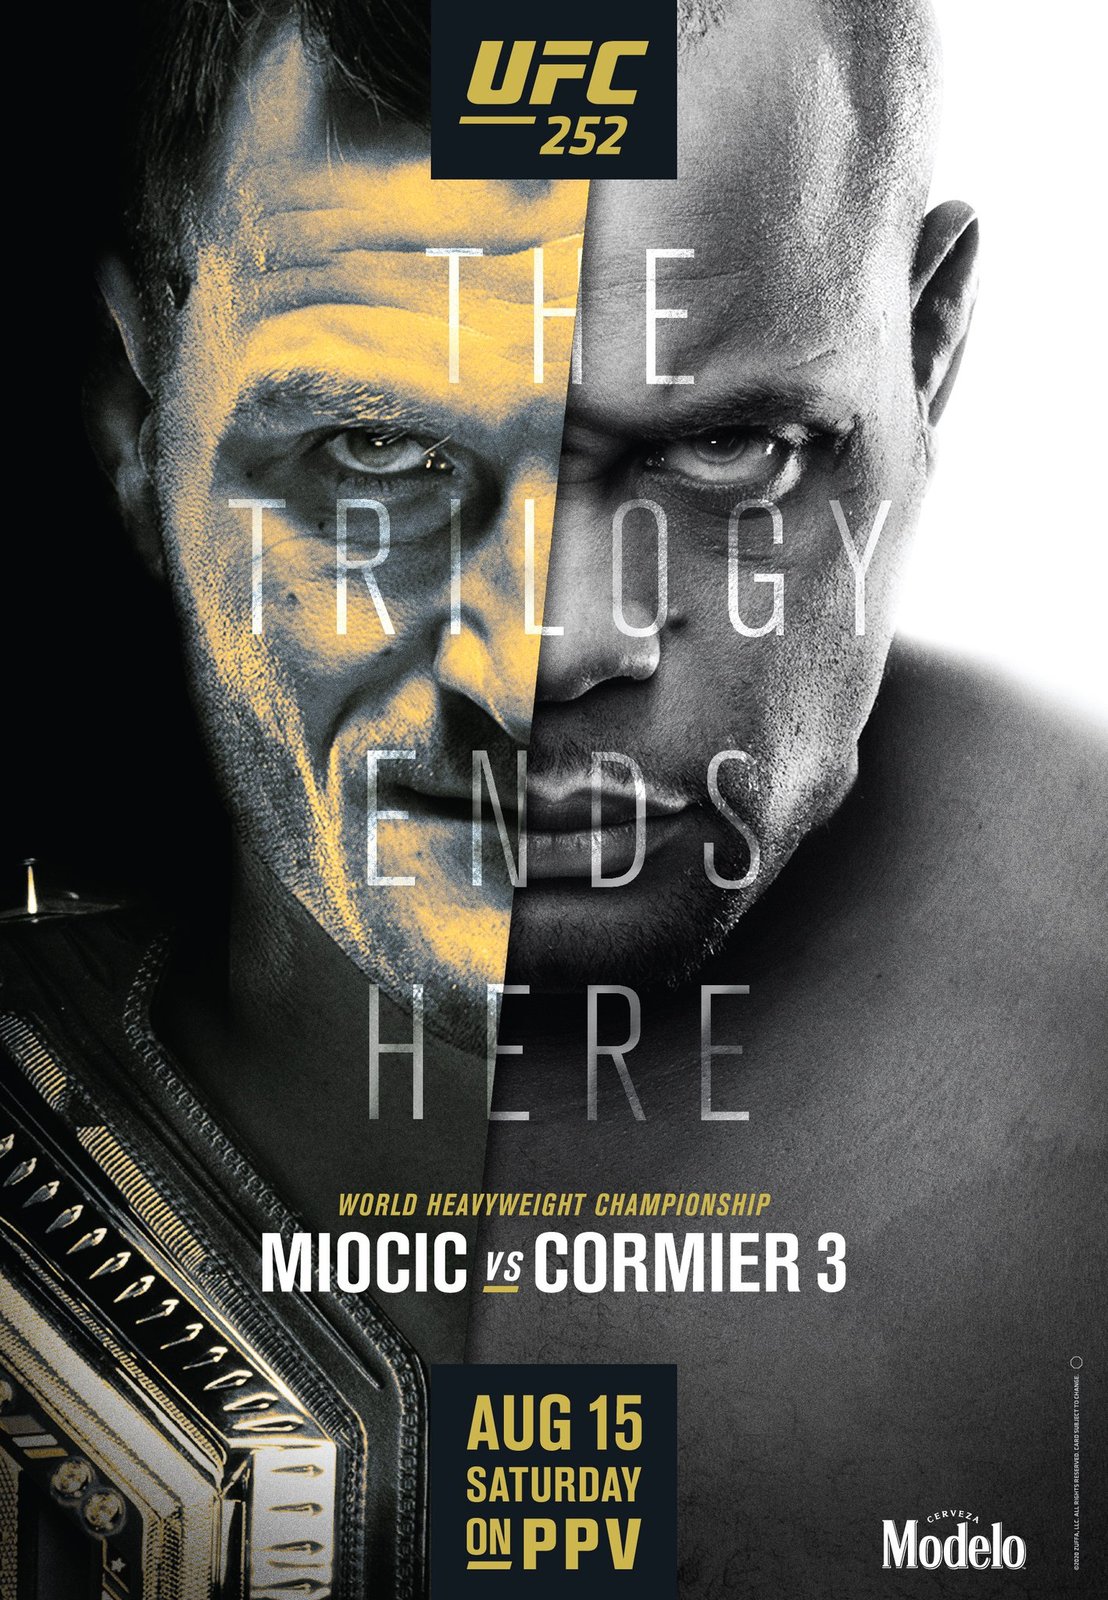 UFC 252 Poster Miocic vs. Cormier 3 MMA Fight Event Card Art Print 24x36 27x40